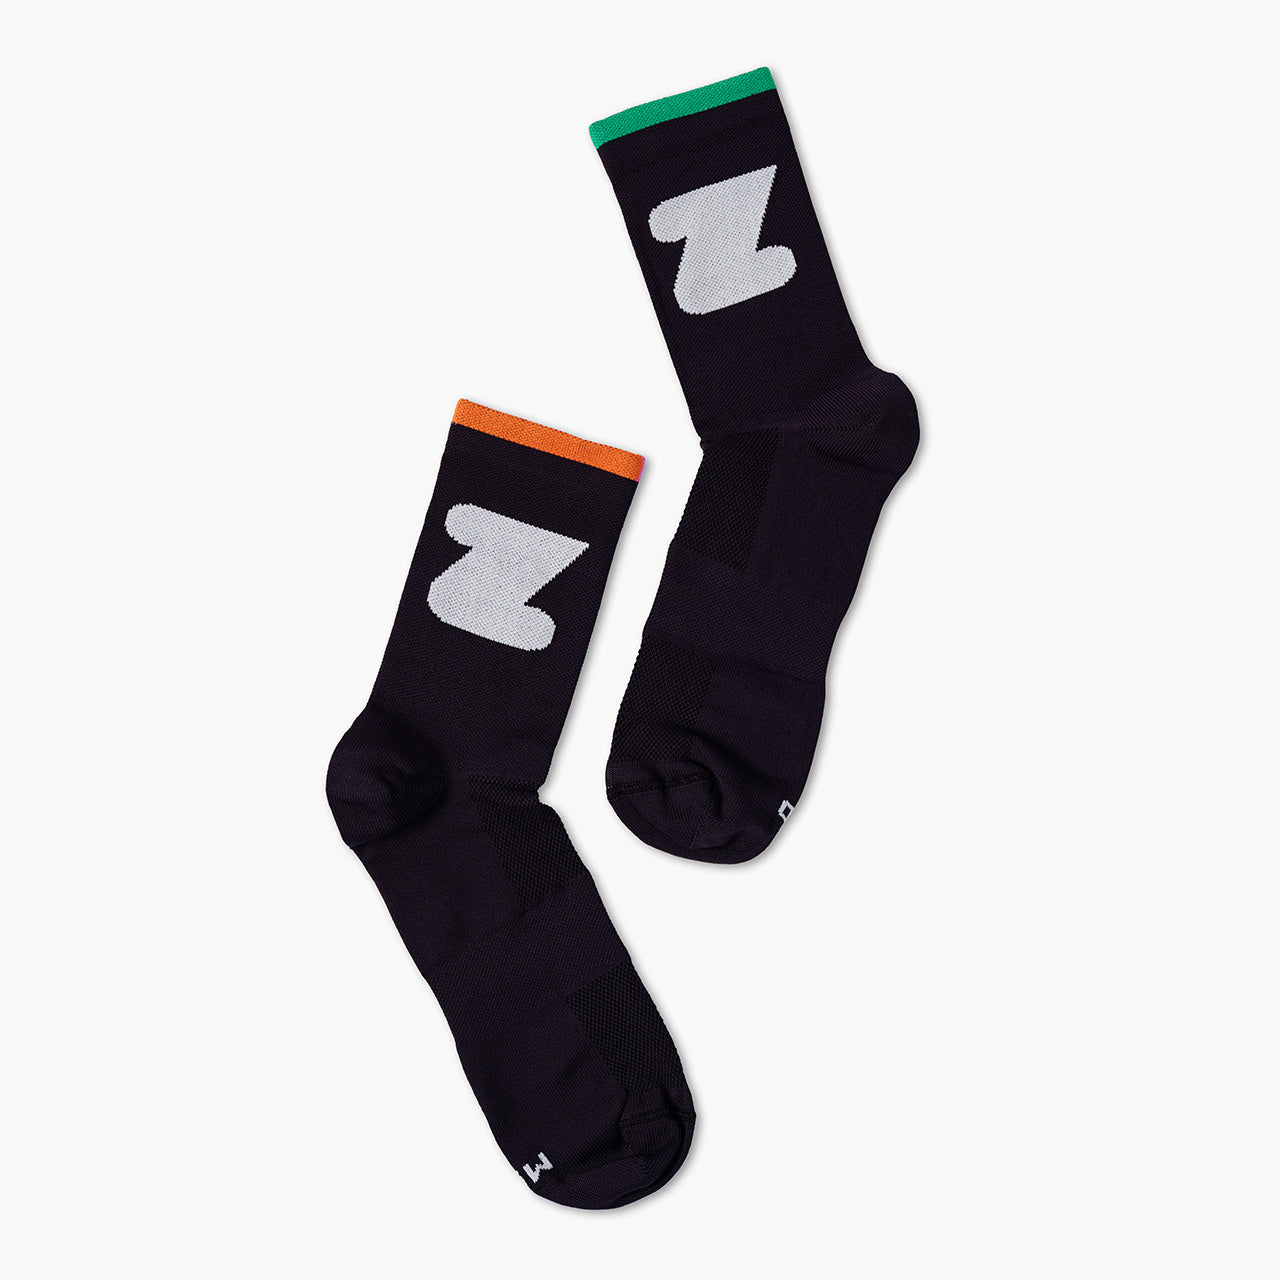 Cycling Color Shop Zwift Socks - Block Core